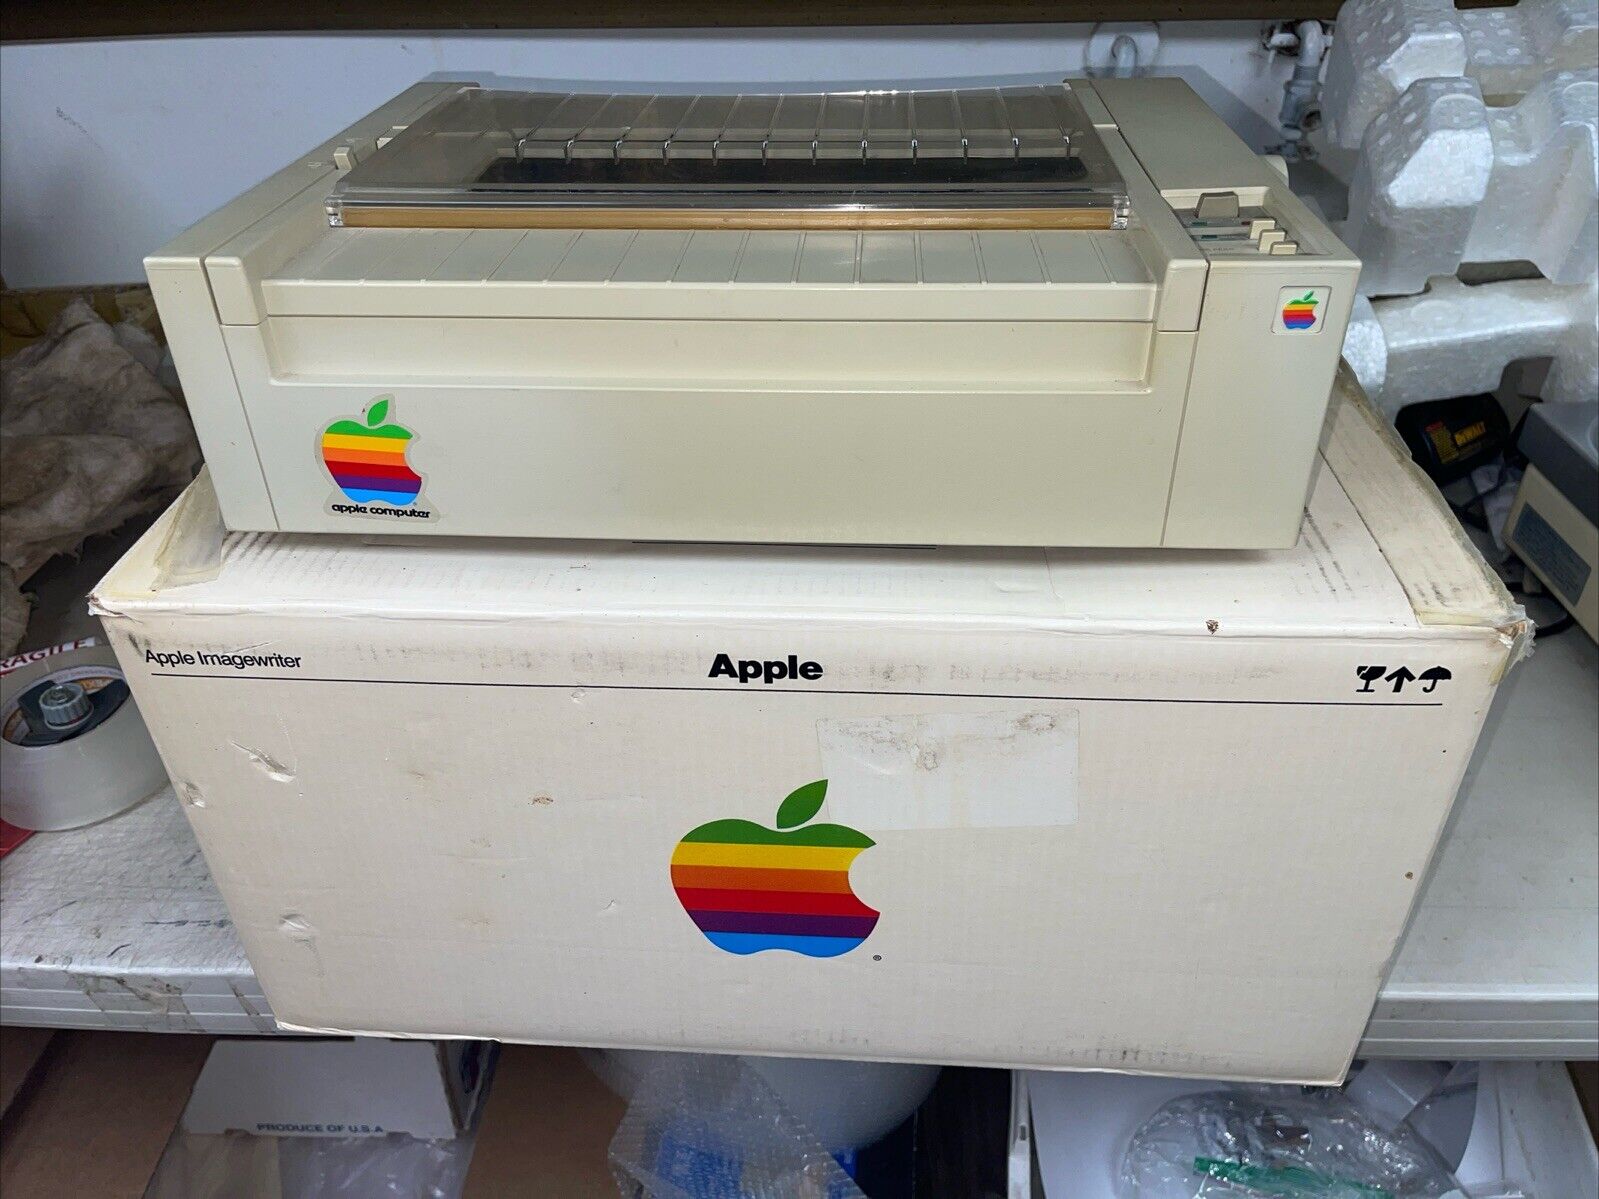 Vintage Apple Imagewriter Printer A9M0303 in Original Box